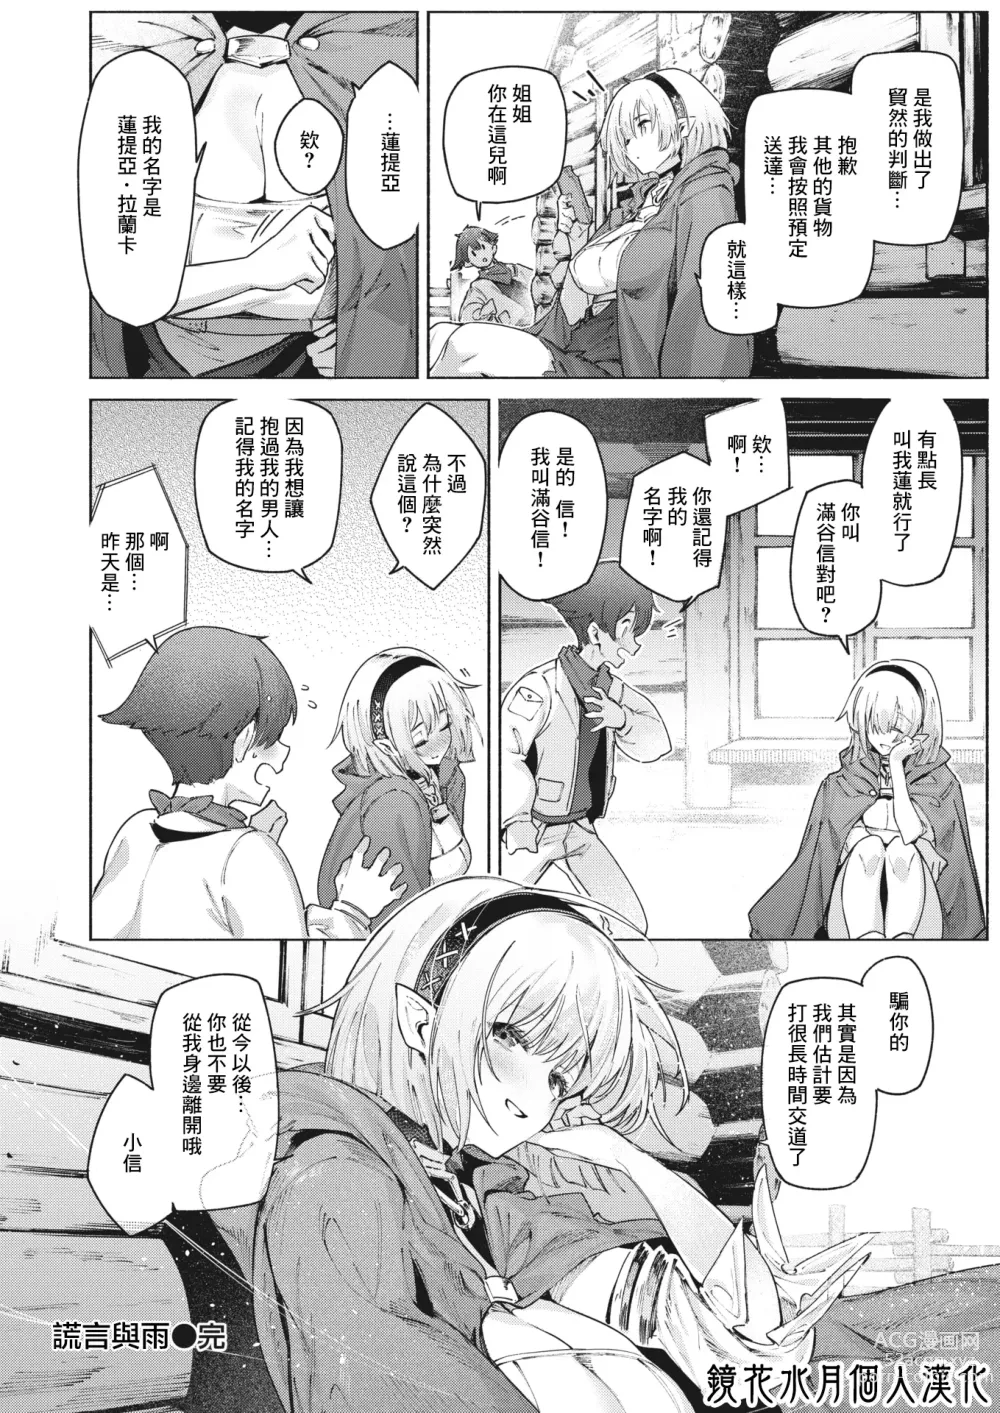 Page 30 of manga 謊言與雨